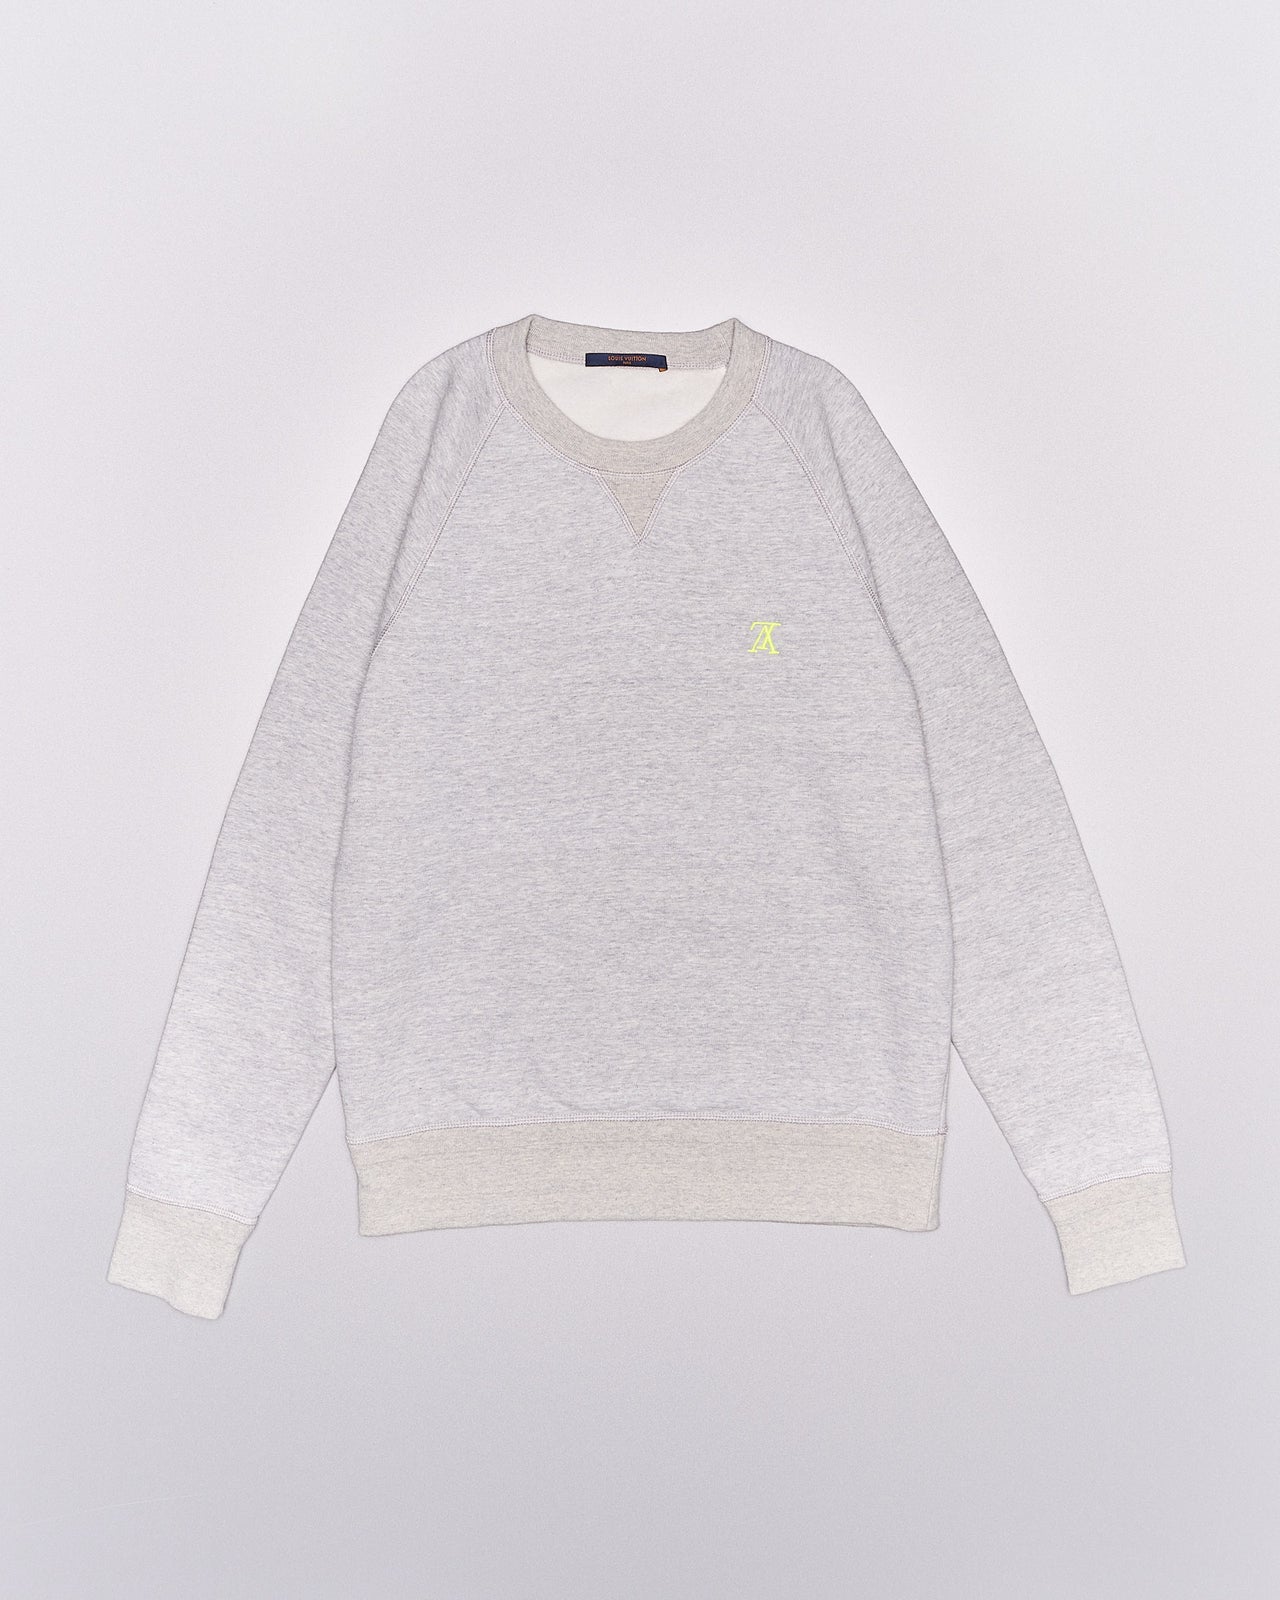 Louis Vuitton Japan exclusive upside down embroidered logo sweatshirt